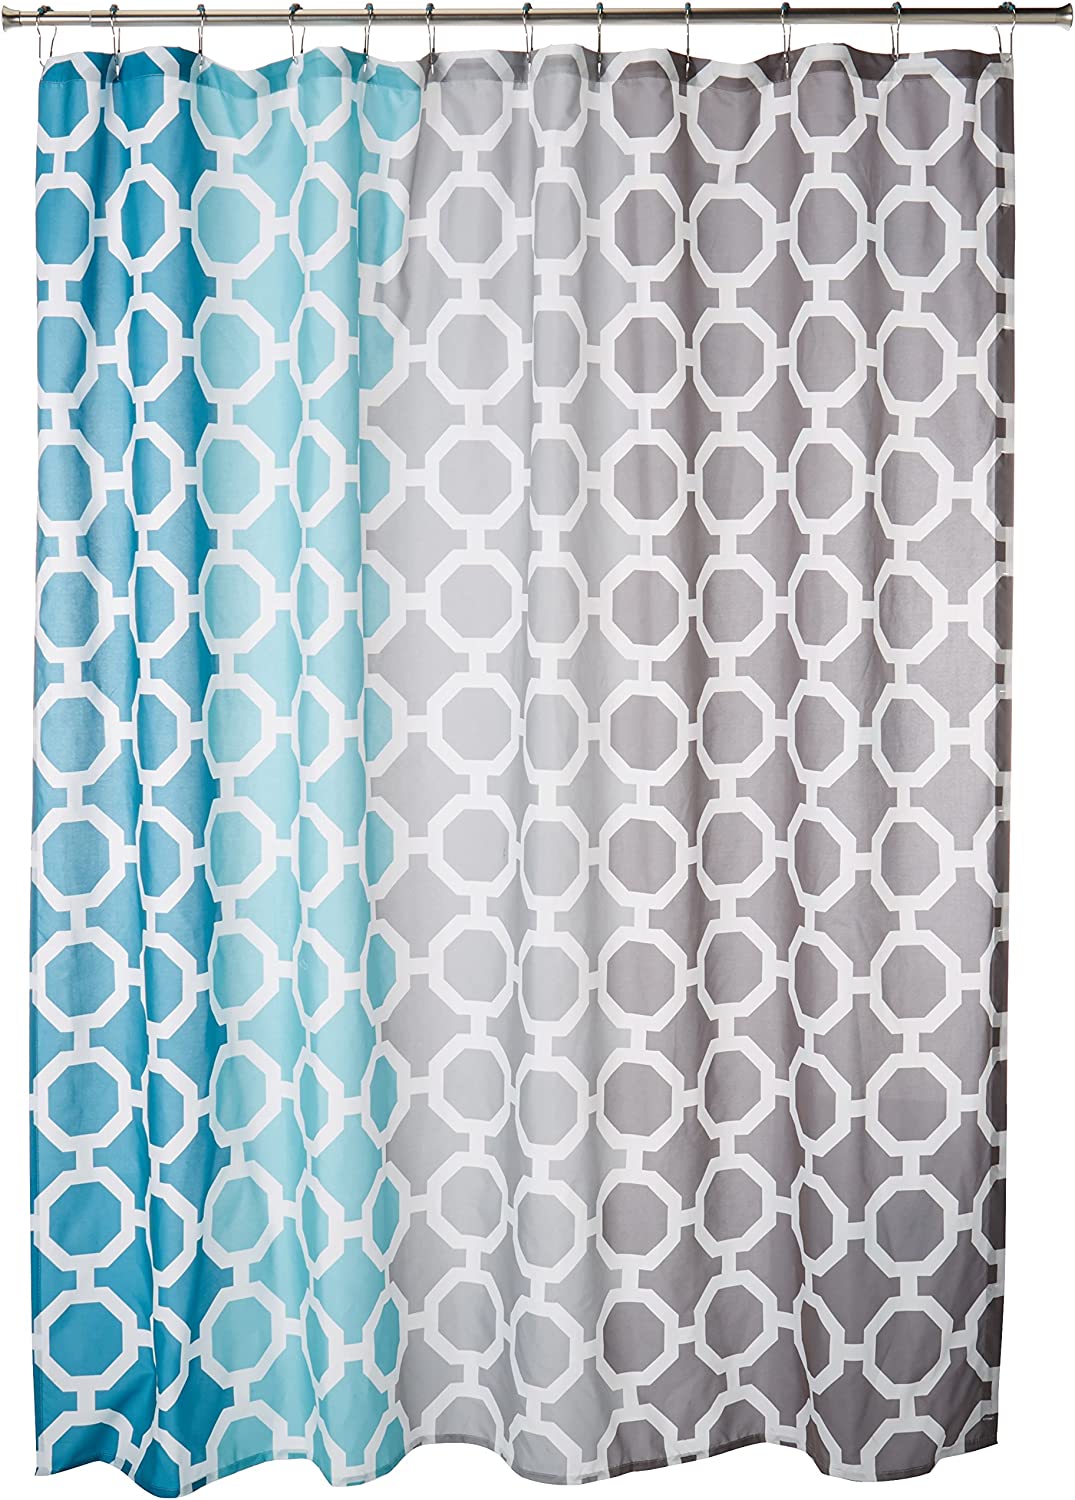 90√É‚Äö√Ç¬∞ by Design Lab Dani Printed Shower Curtain and Hook Set 72x72 Teal, 72 x 72